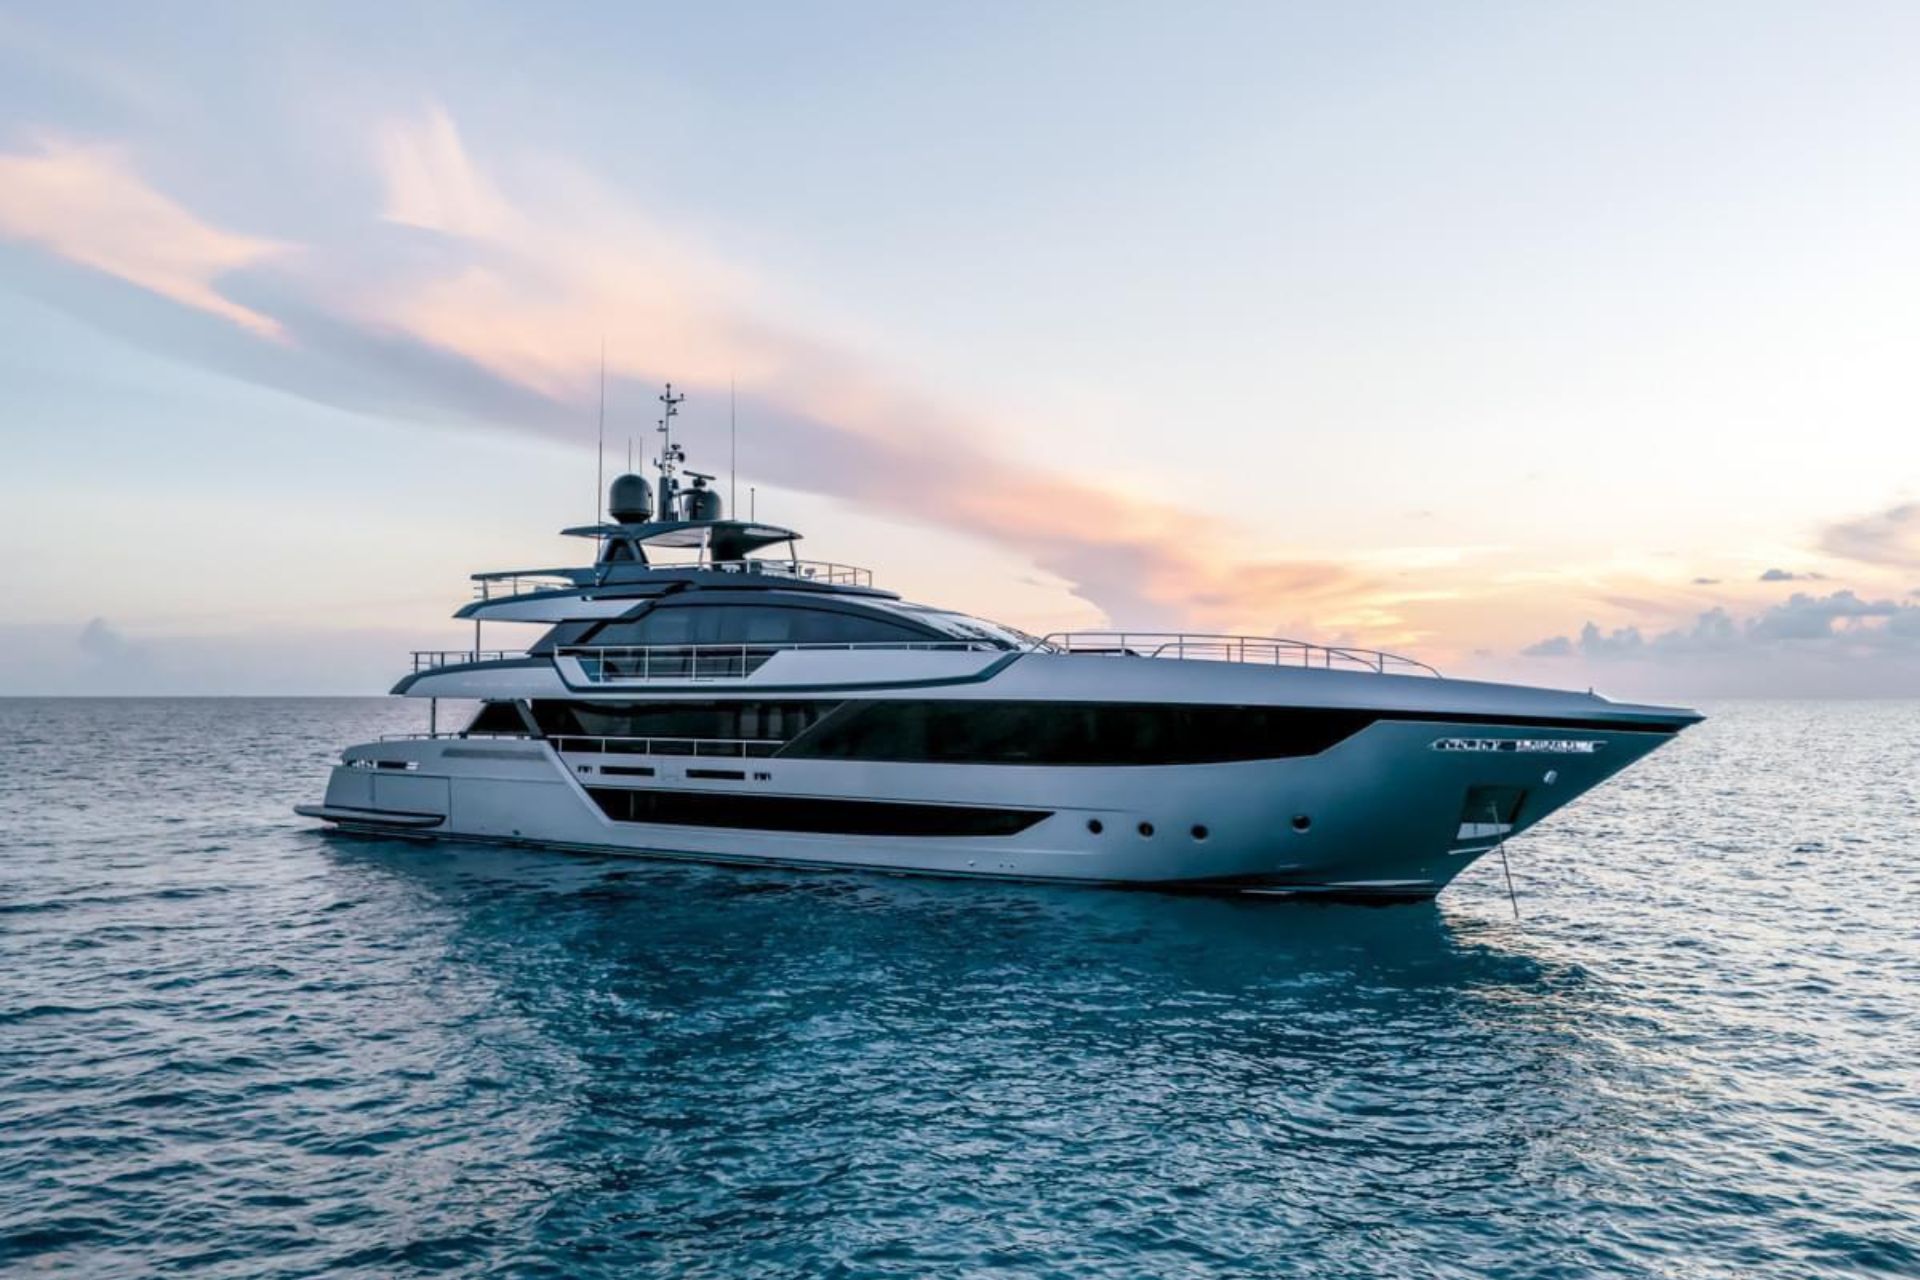 Elite Luxury yacht - Private luxury yacht rental